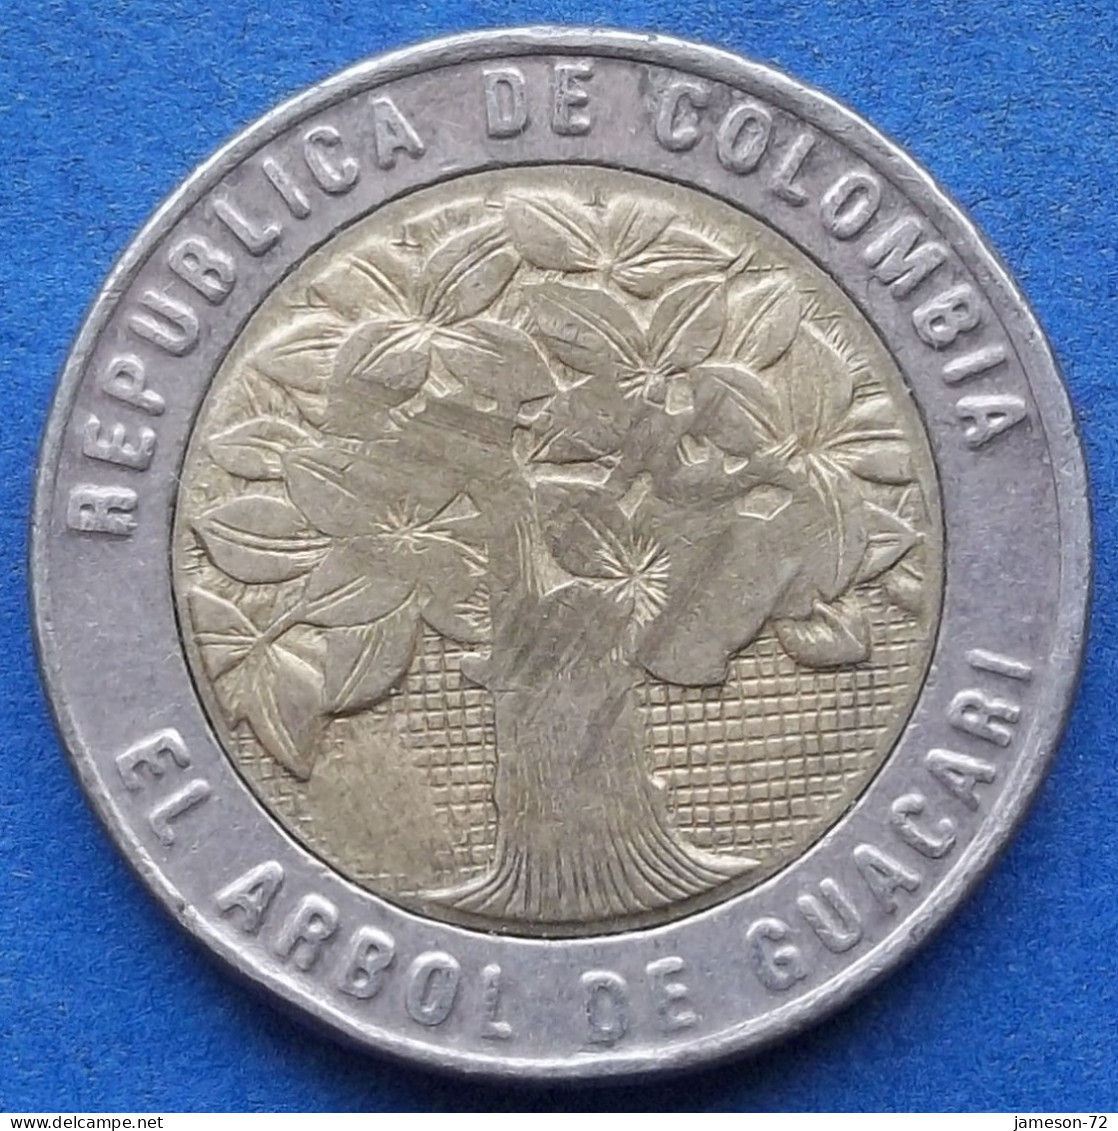 COLOMBIA - 500 Pesos 2008 "Guacari Tree" KM# 286 Republic - Edelweiss Coins - Kolumbien